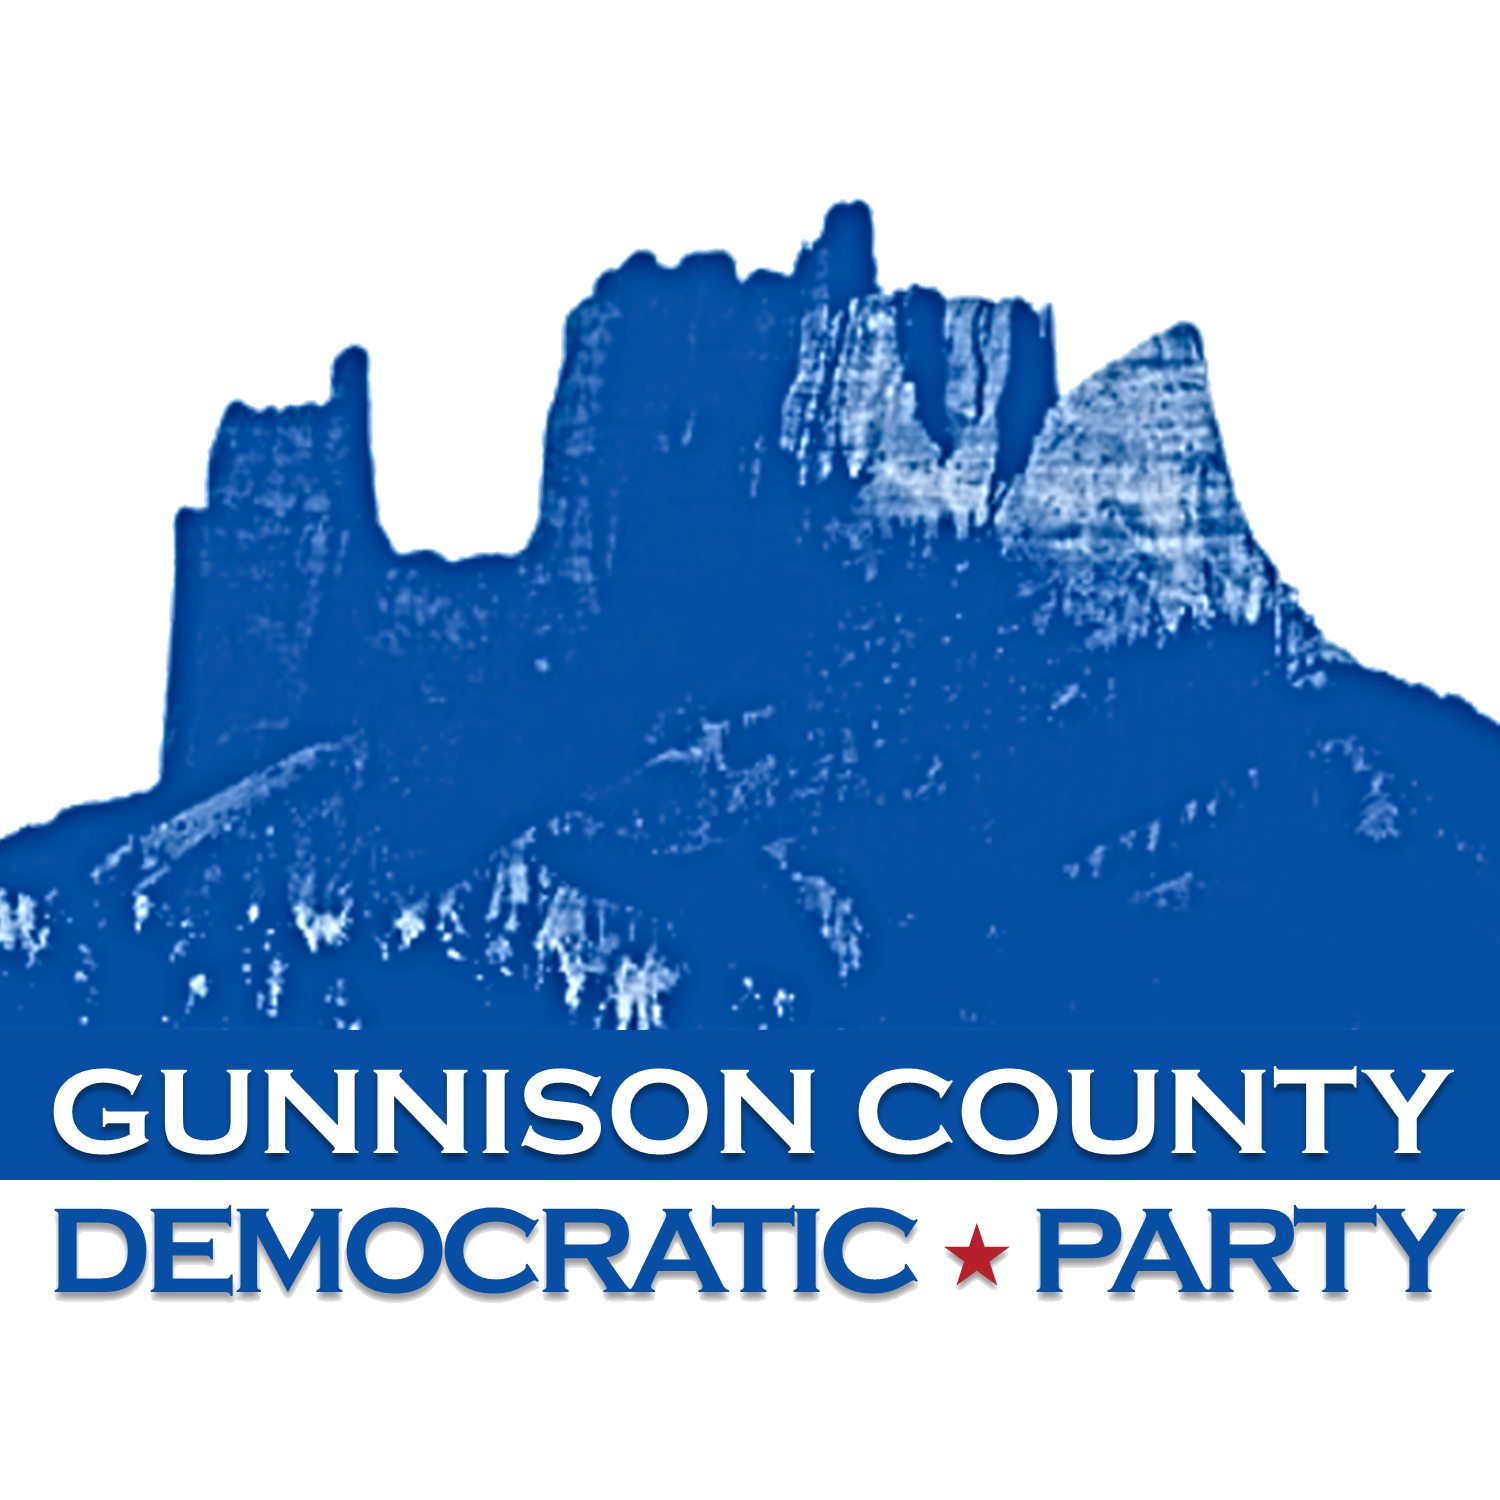 Gunnison County Democratic Party (logo)